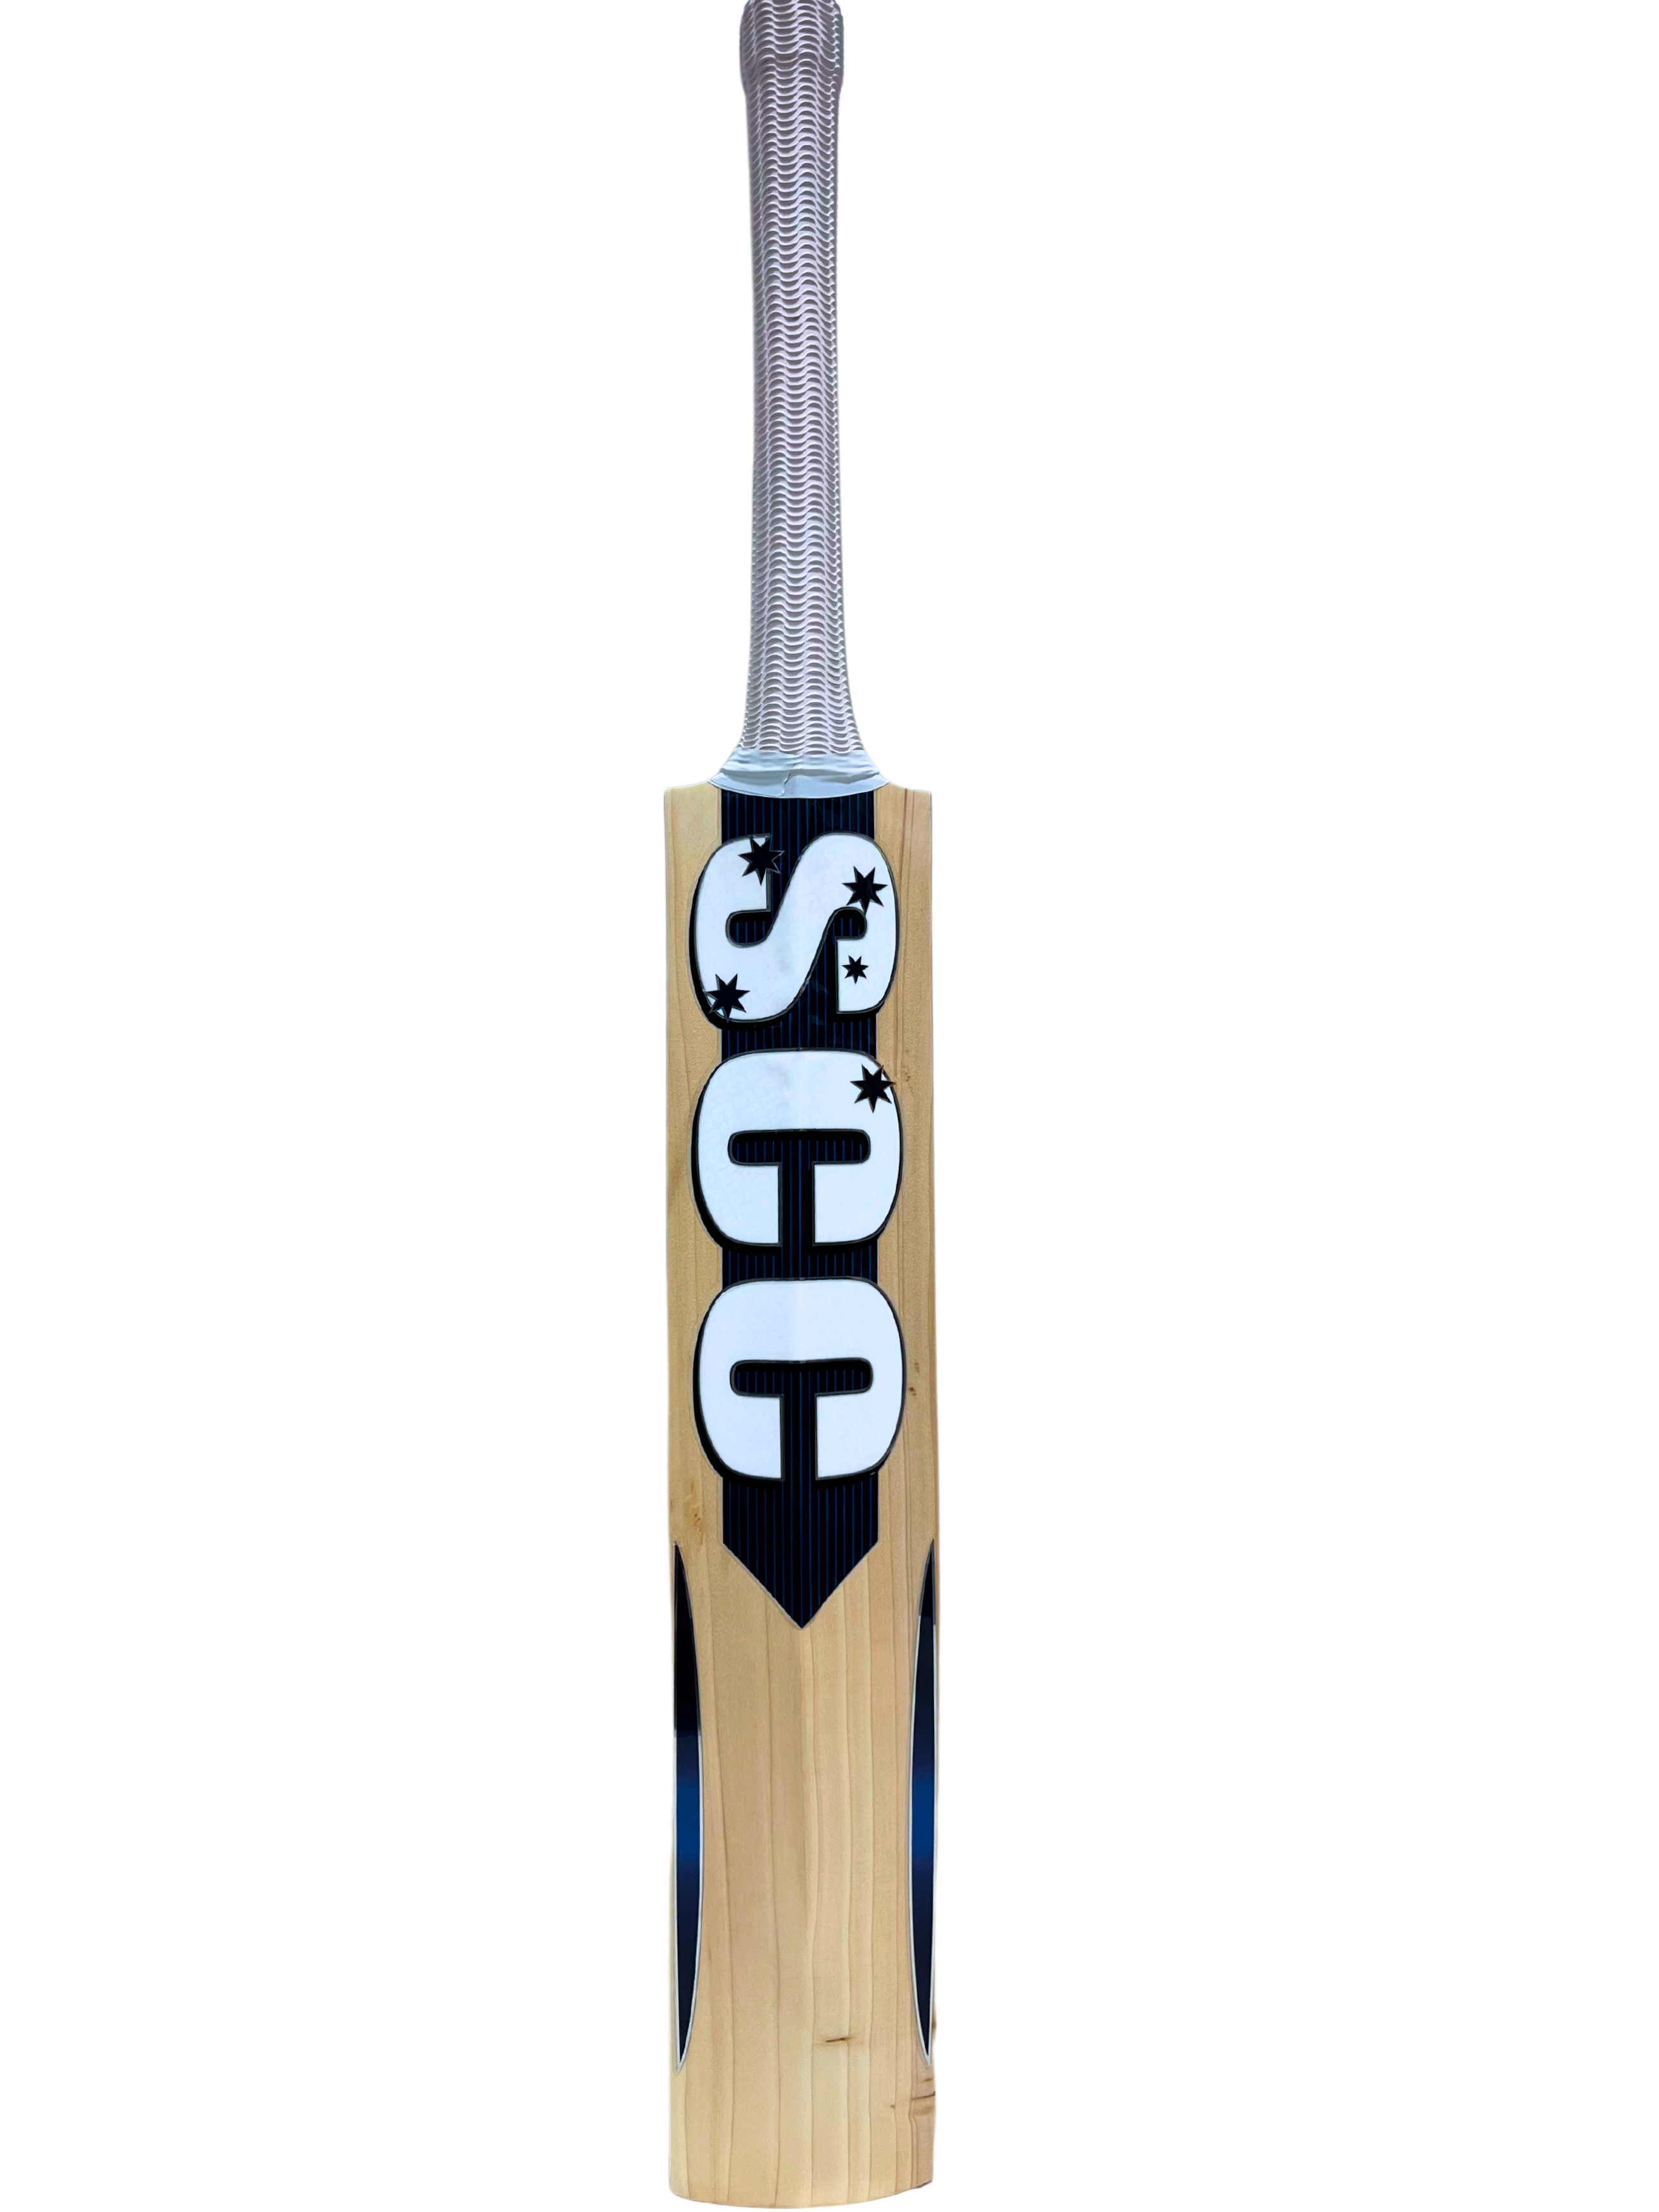 Southern Cross Cricket - Orion Indoor Bat